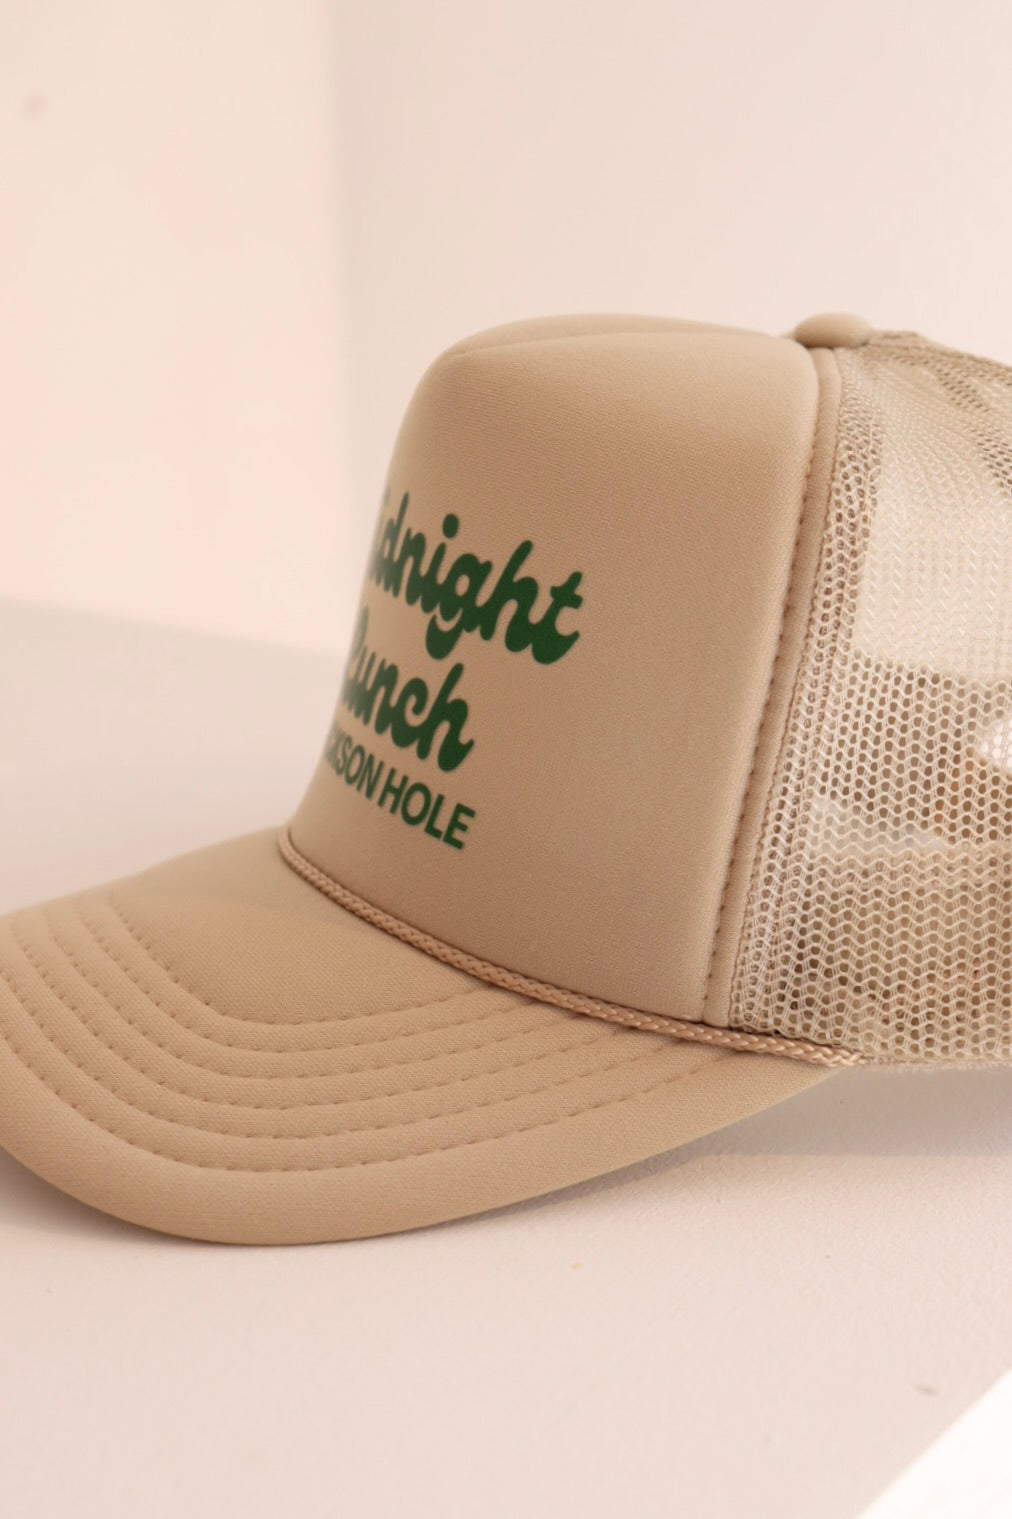 Jackson Hole Trucker Hat | Khaki + Green